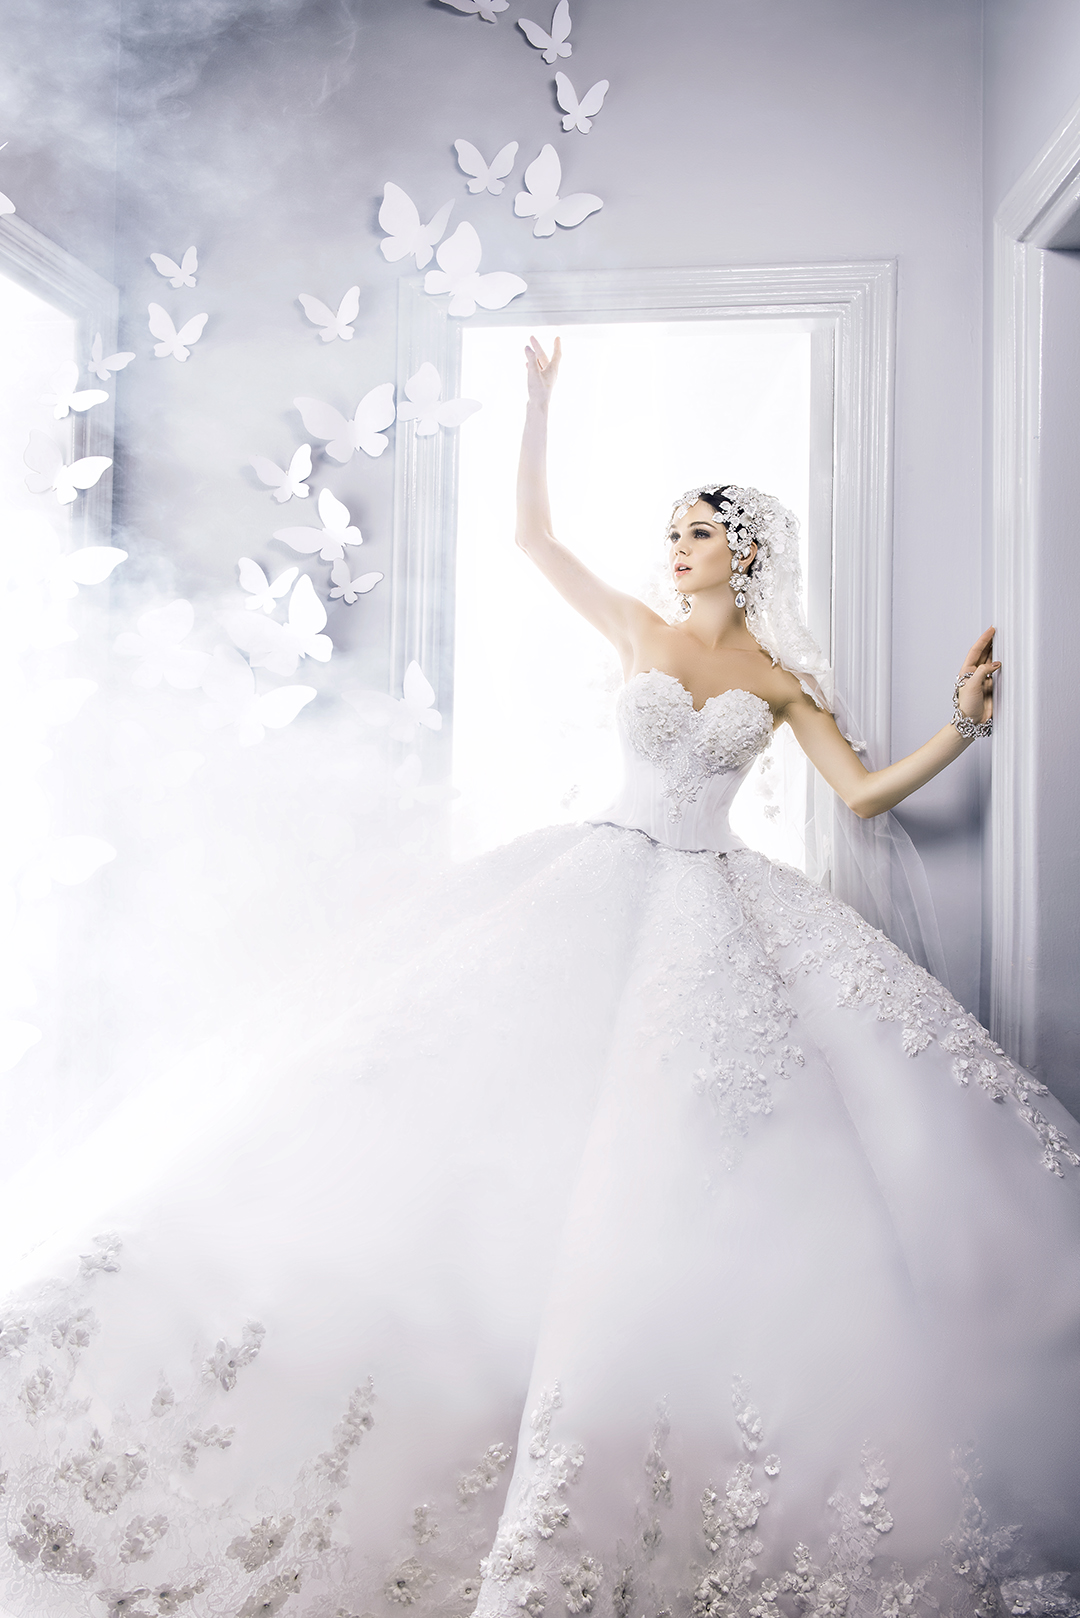 WHITE WEDDING by Jeff Anog